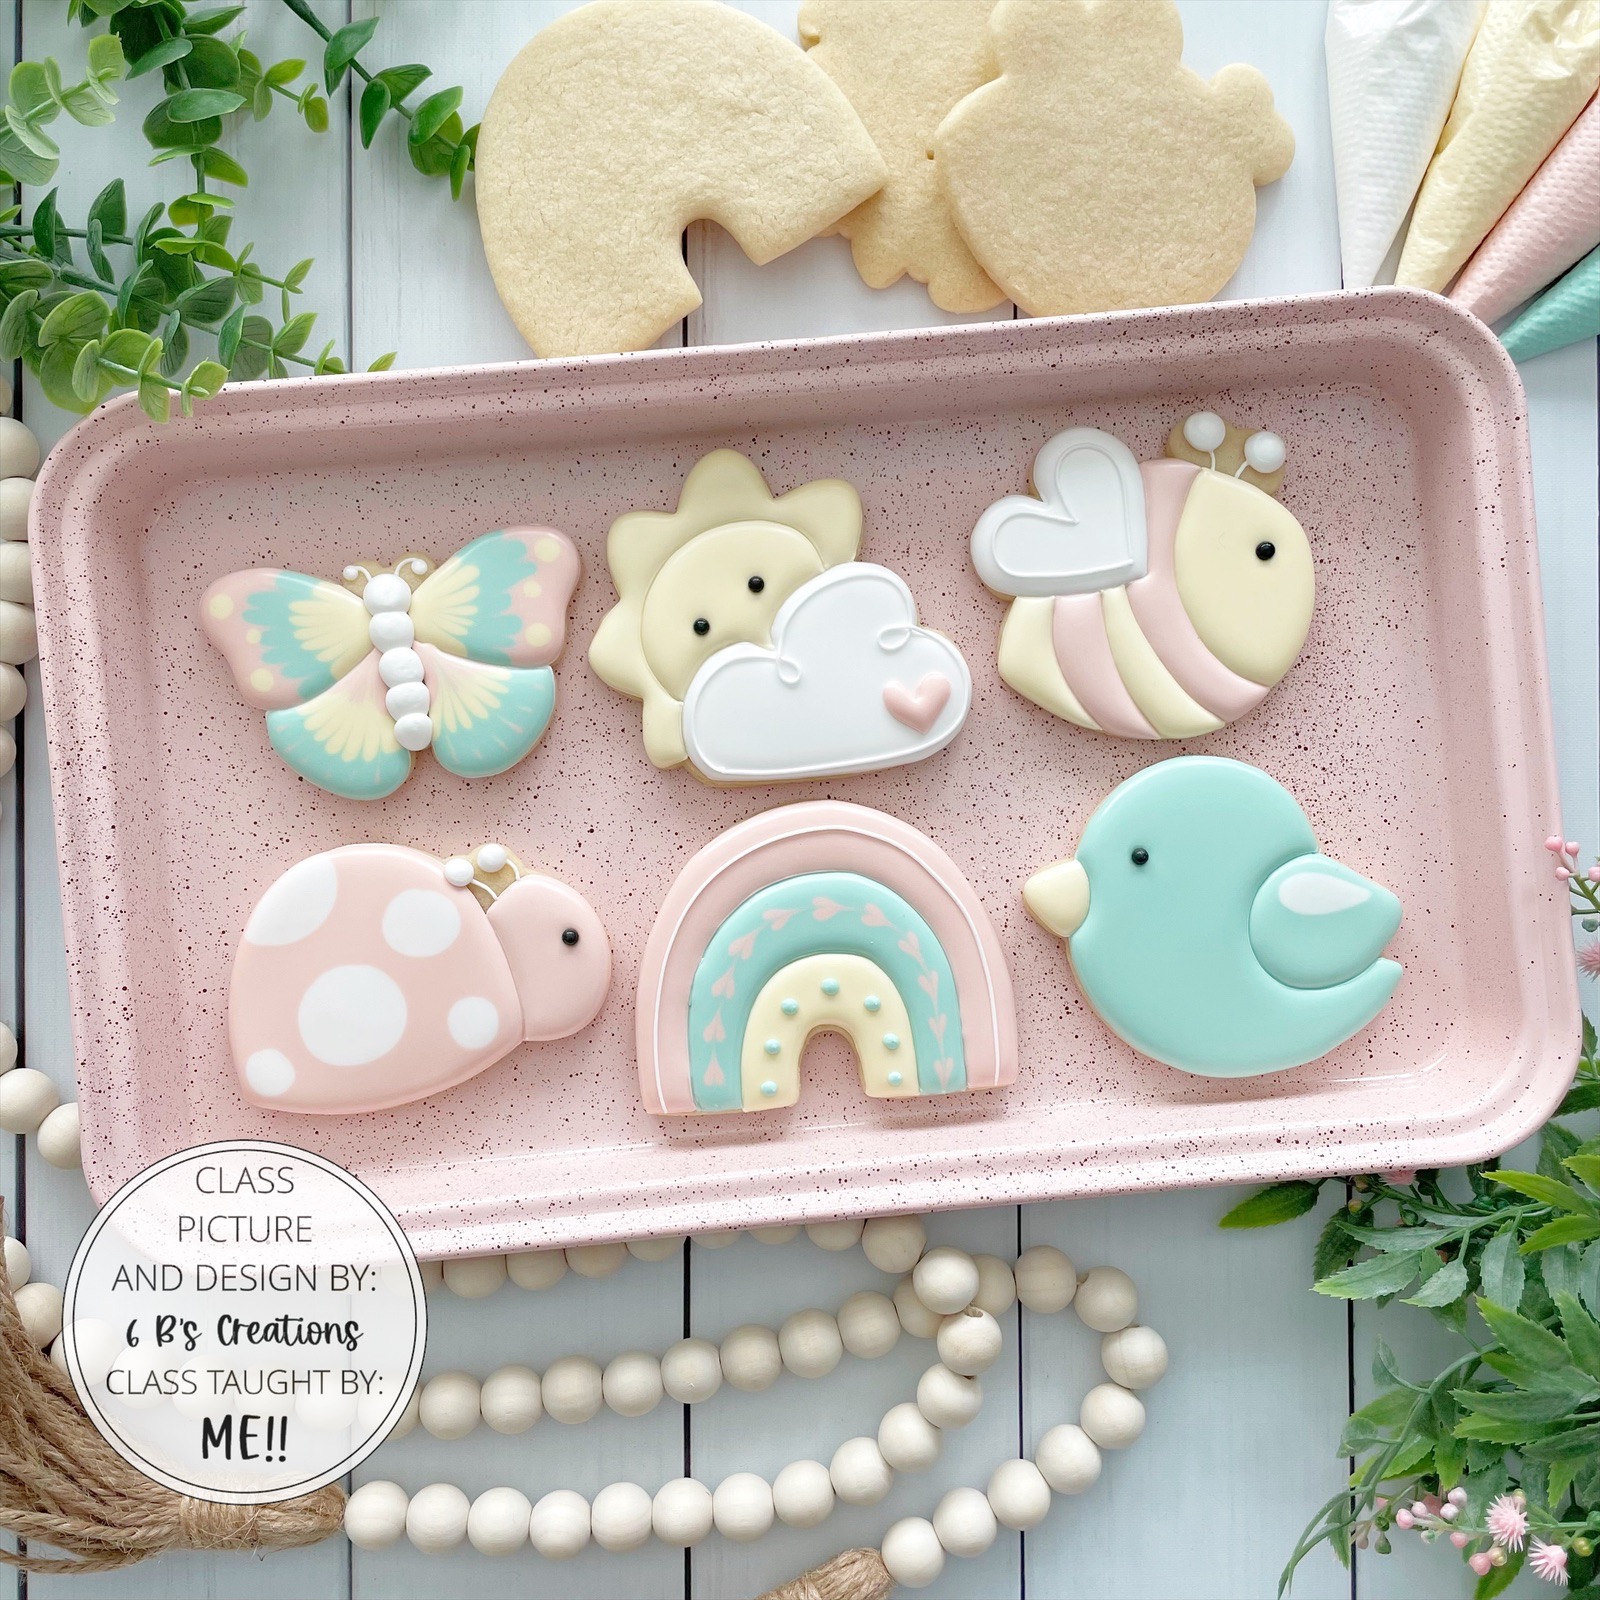 ☀️🌈🐝 CLASS: 06/16 Sweet Summertime Cookie Decorating Class 🐝🌈☀️